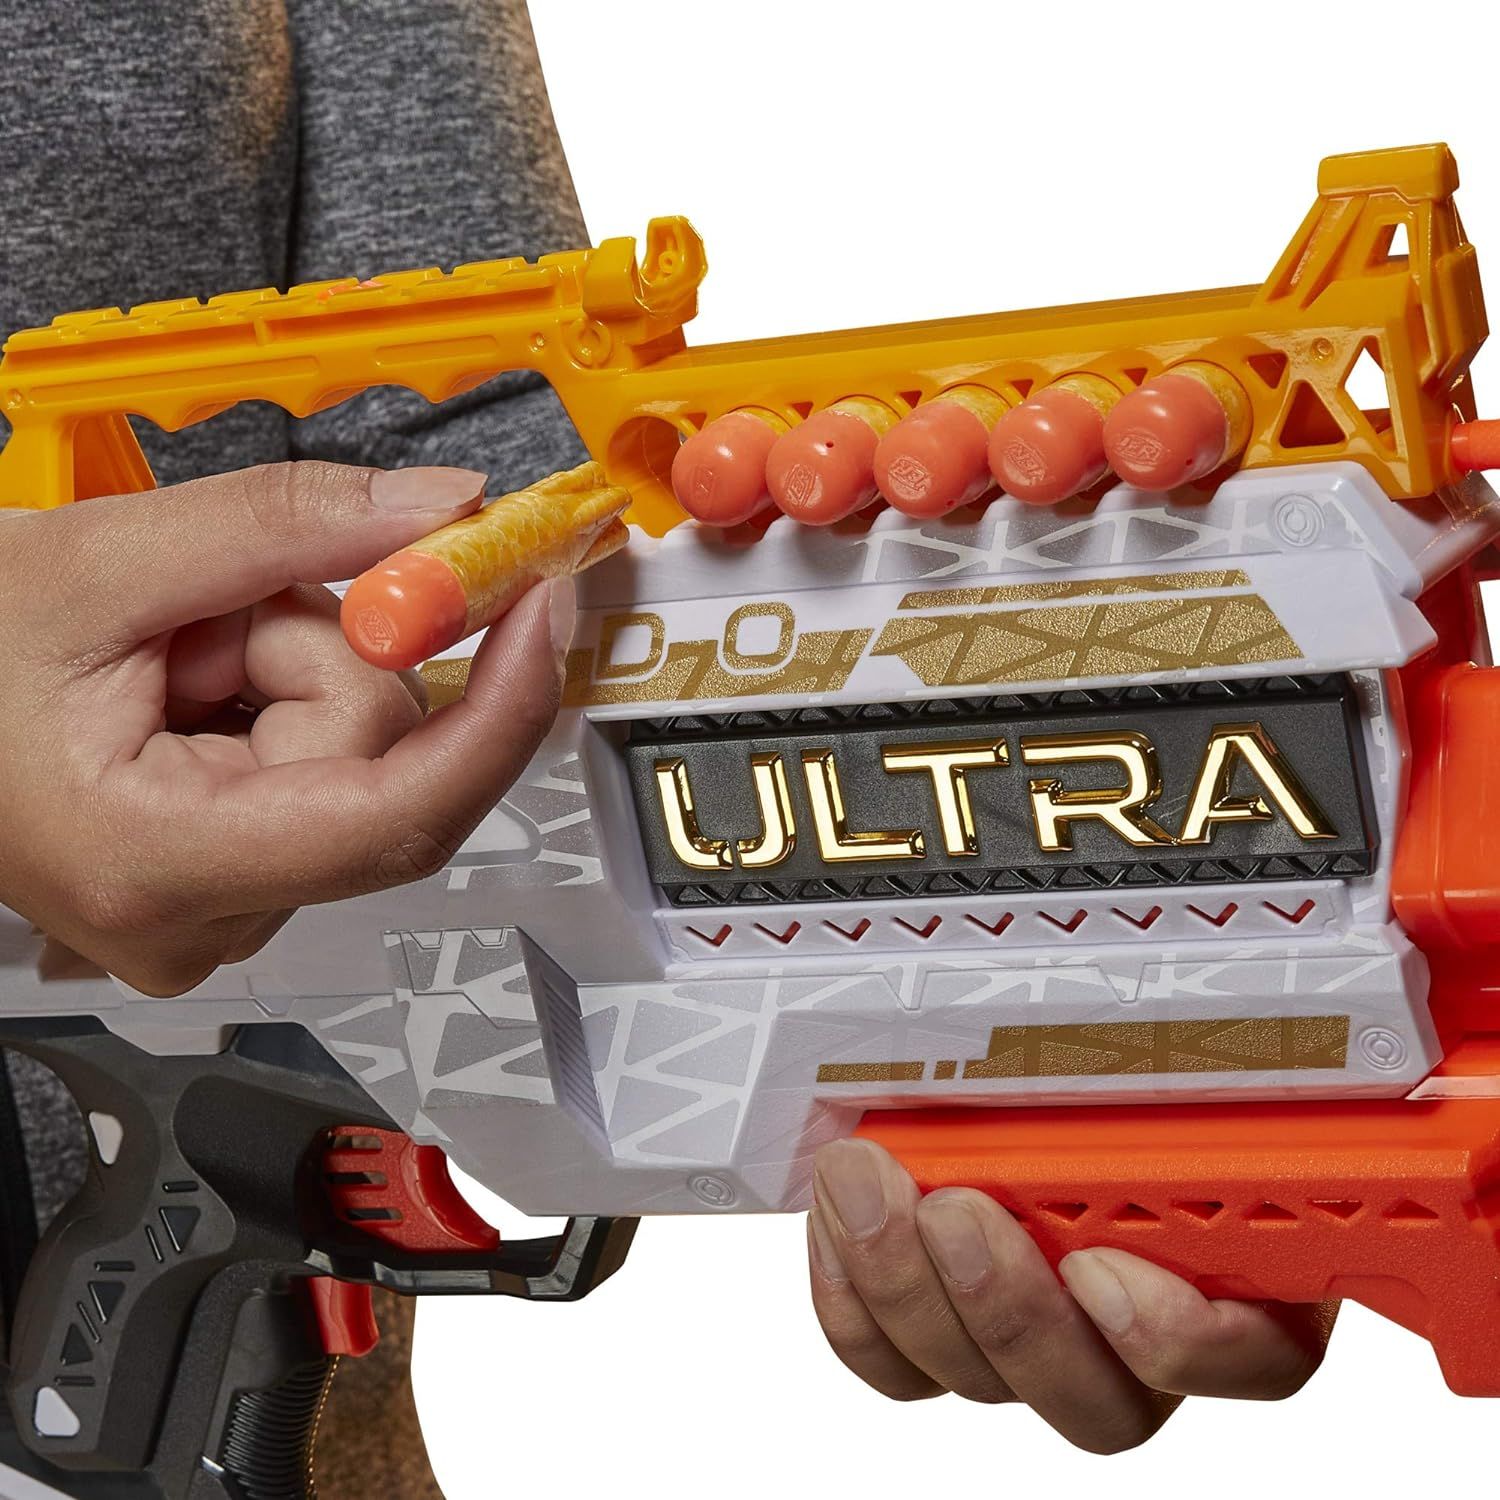 Nerf Ultra Speed Fully Motorized Blaster, Fastest Firing Ultra Blaster, 24  AccuStrike Ultra Darts, Uses Only Ultra Darts